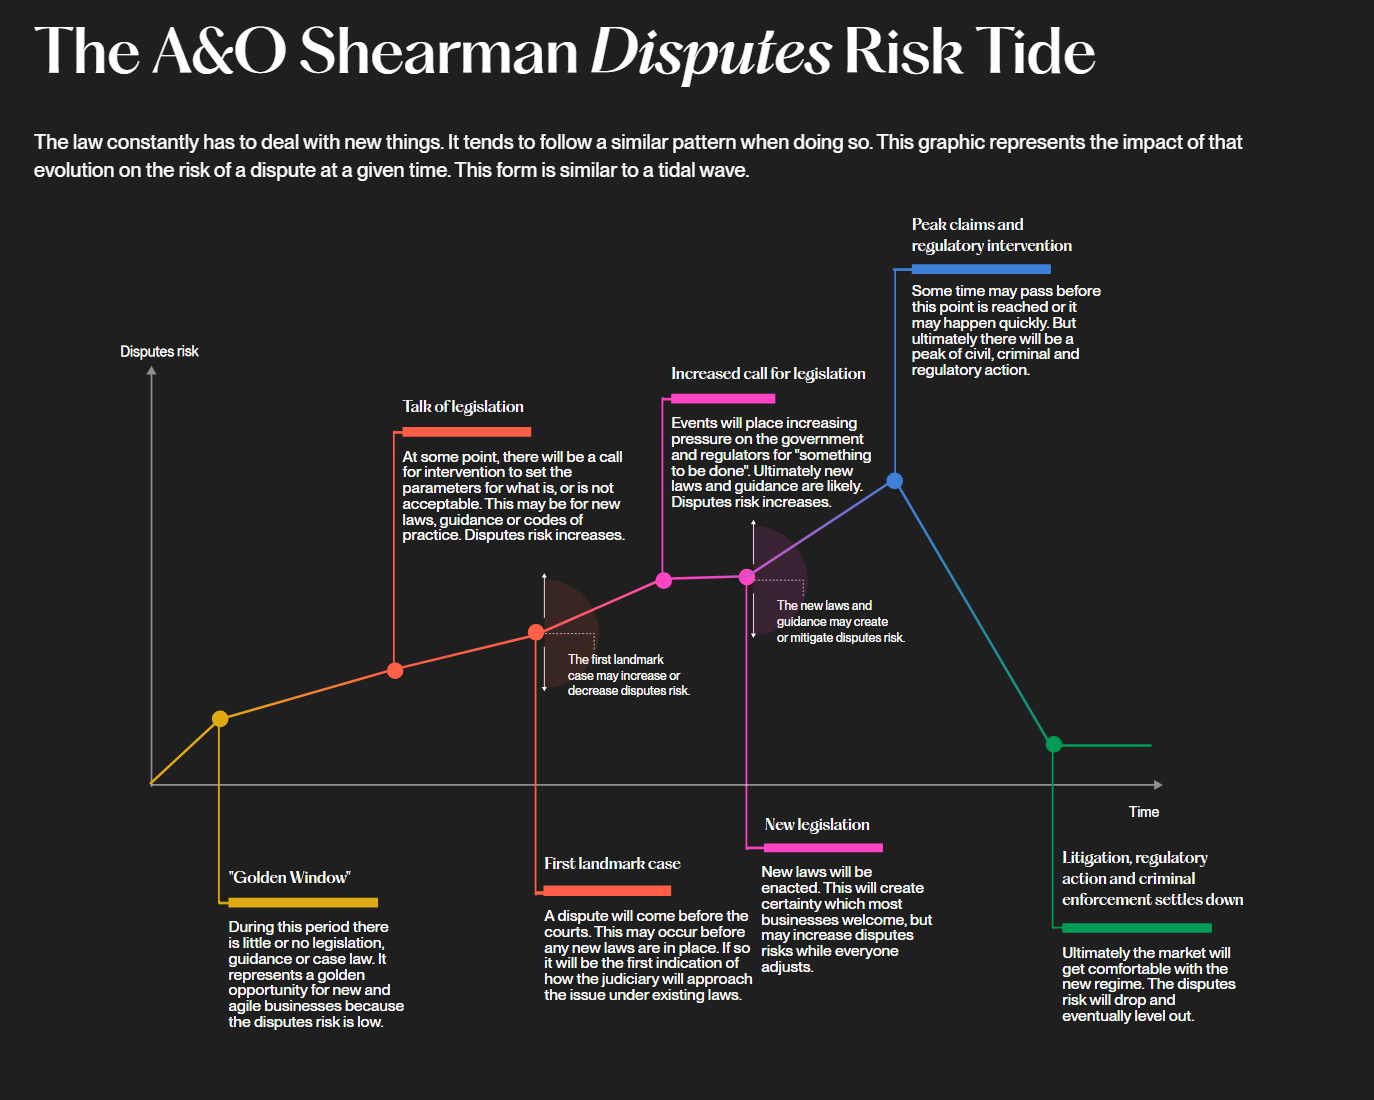 A&O Shearman risk tide model